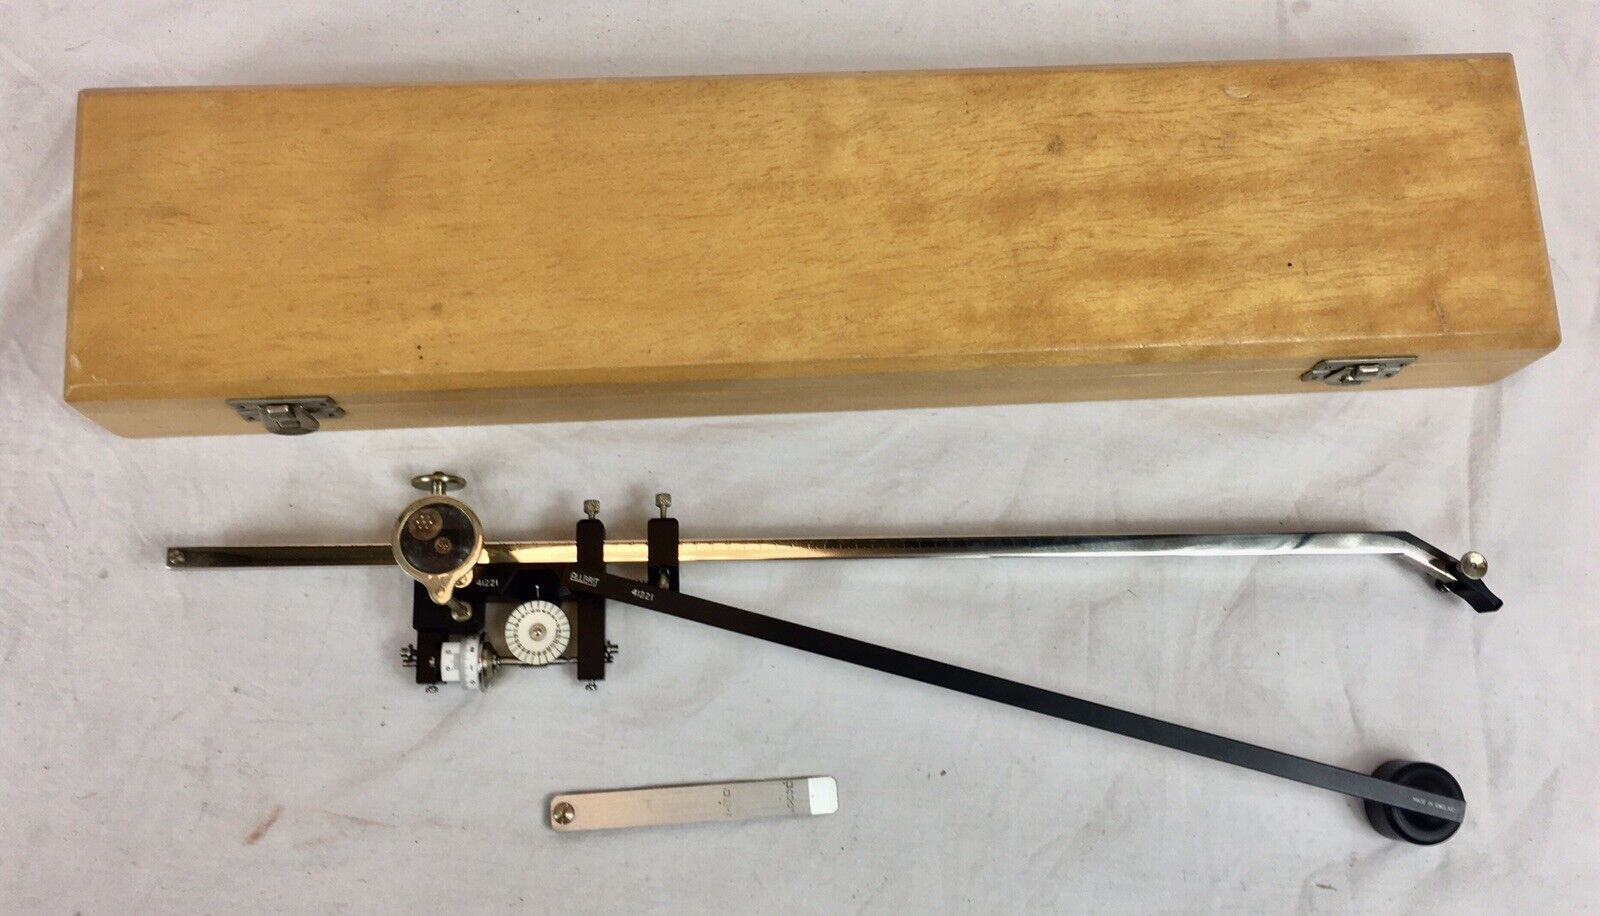 Vintage ALLBRIT Fixed Arm Polar Planimeter, Mathmatical Measuring Instrument